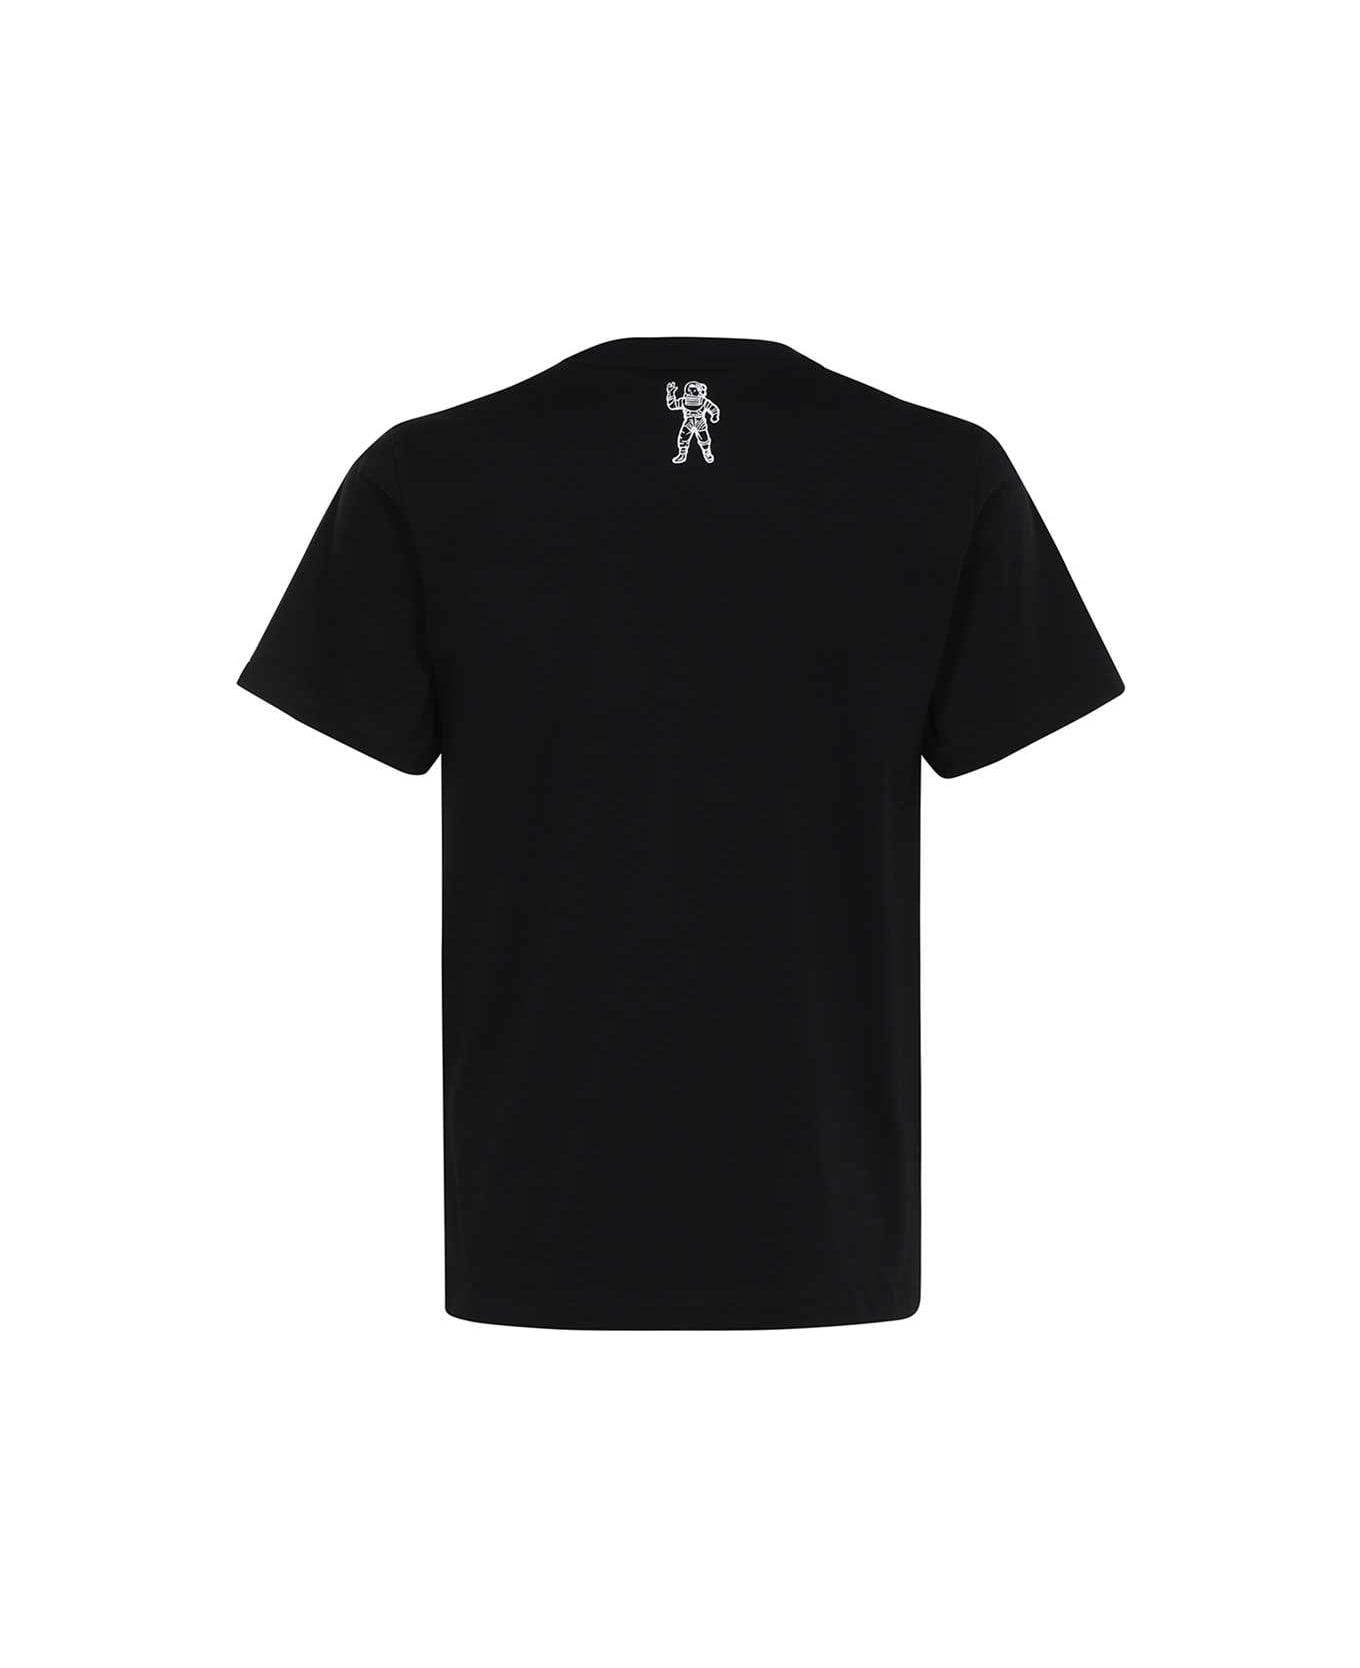 Billionaire Boys Club Cotton T-shirt - black シャツ